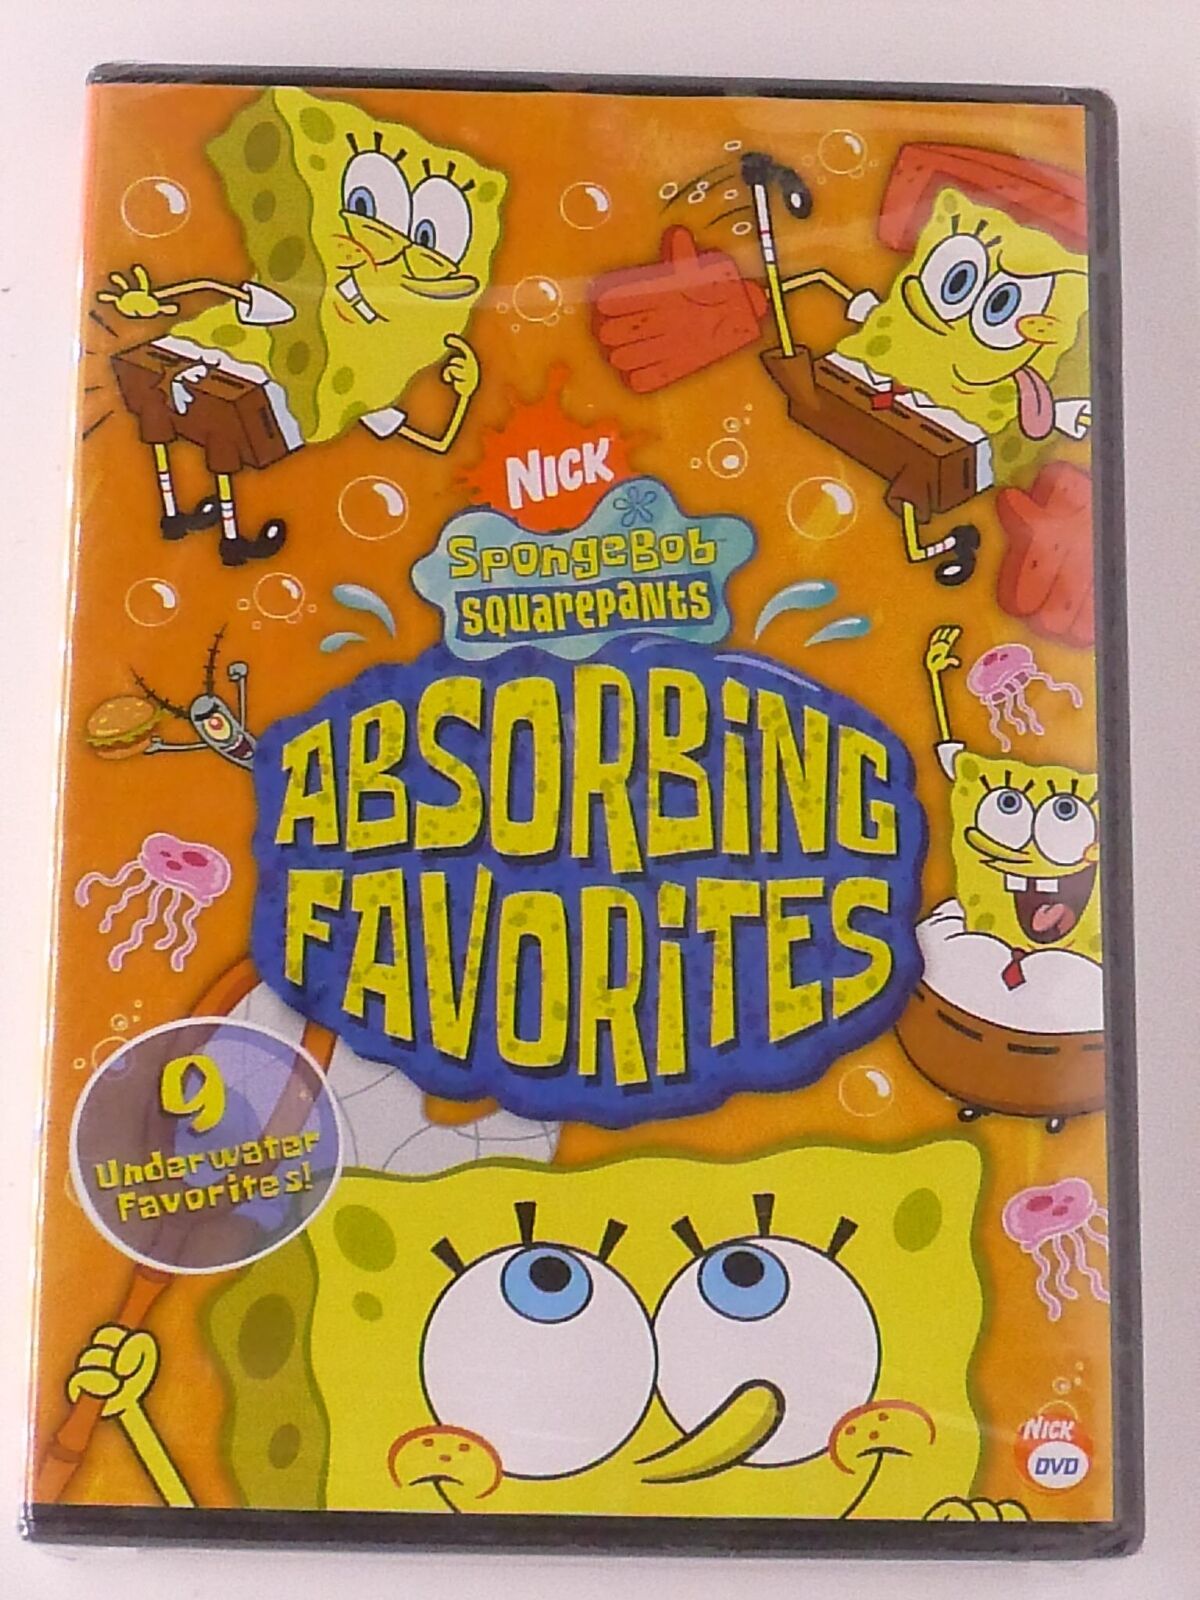 Spongebob Squarepants Absorbing Favorites Dvd 9 Episodes New23 Dvds4me 1379